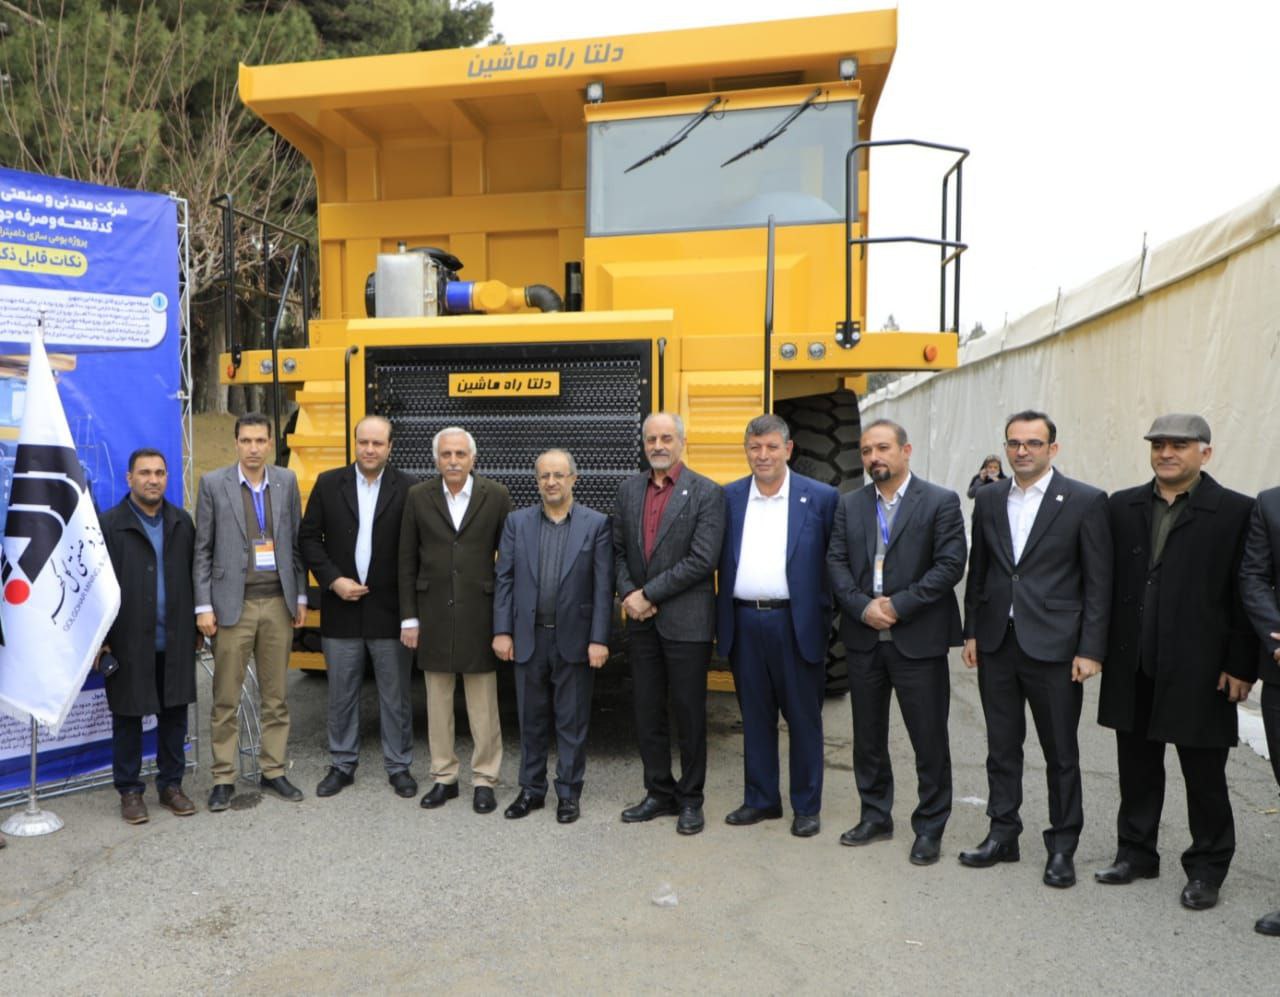 GolGohar Mining Company unveiled their new mining dump truck